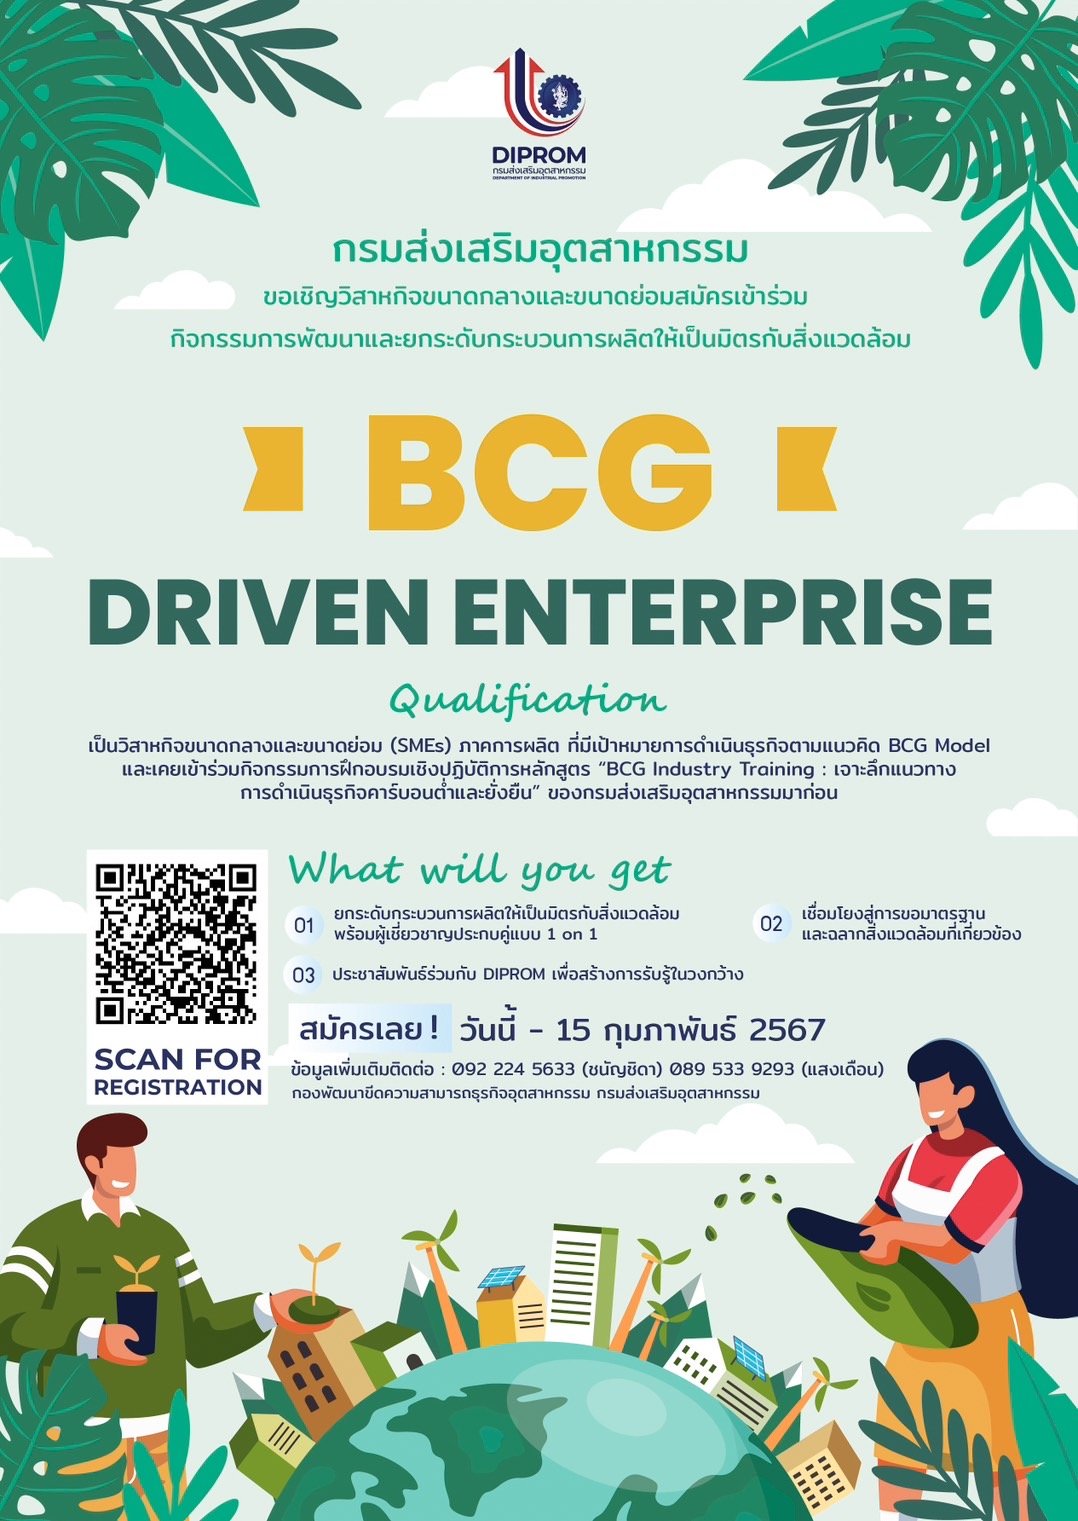 "BCG DRIVEN ENTERPRISE" ยกระดับกระบวนการผลิต